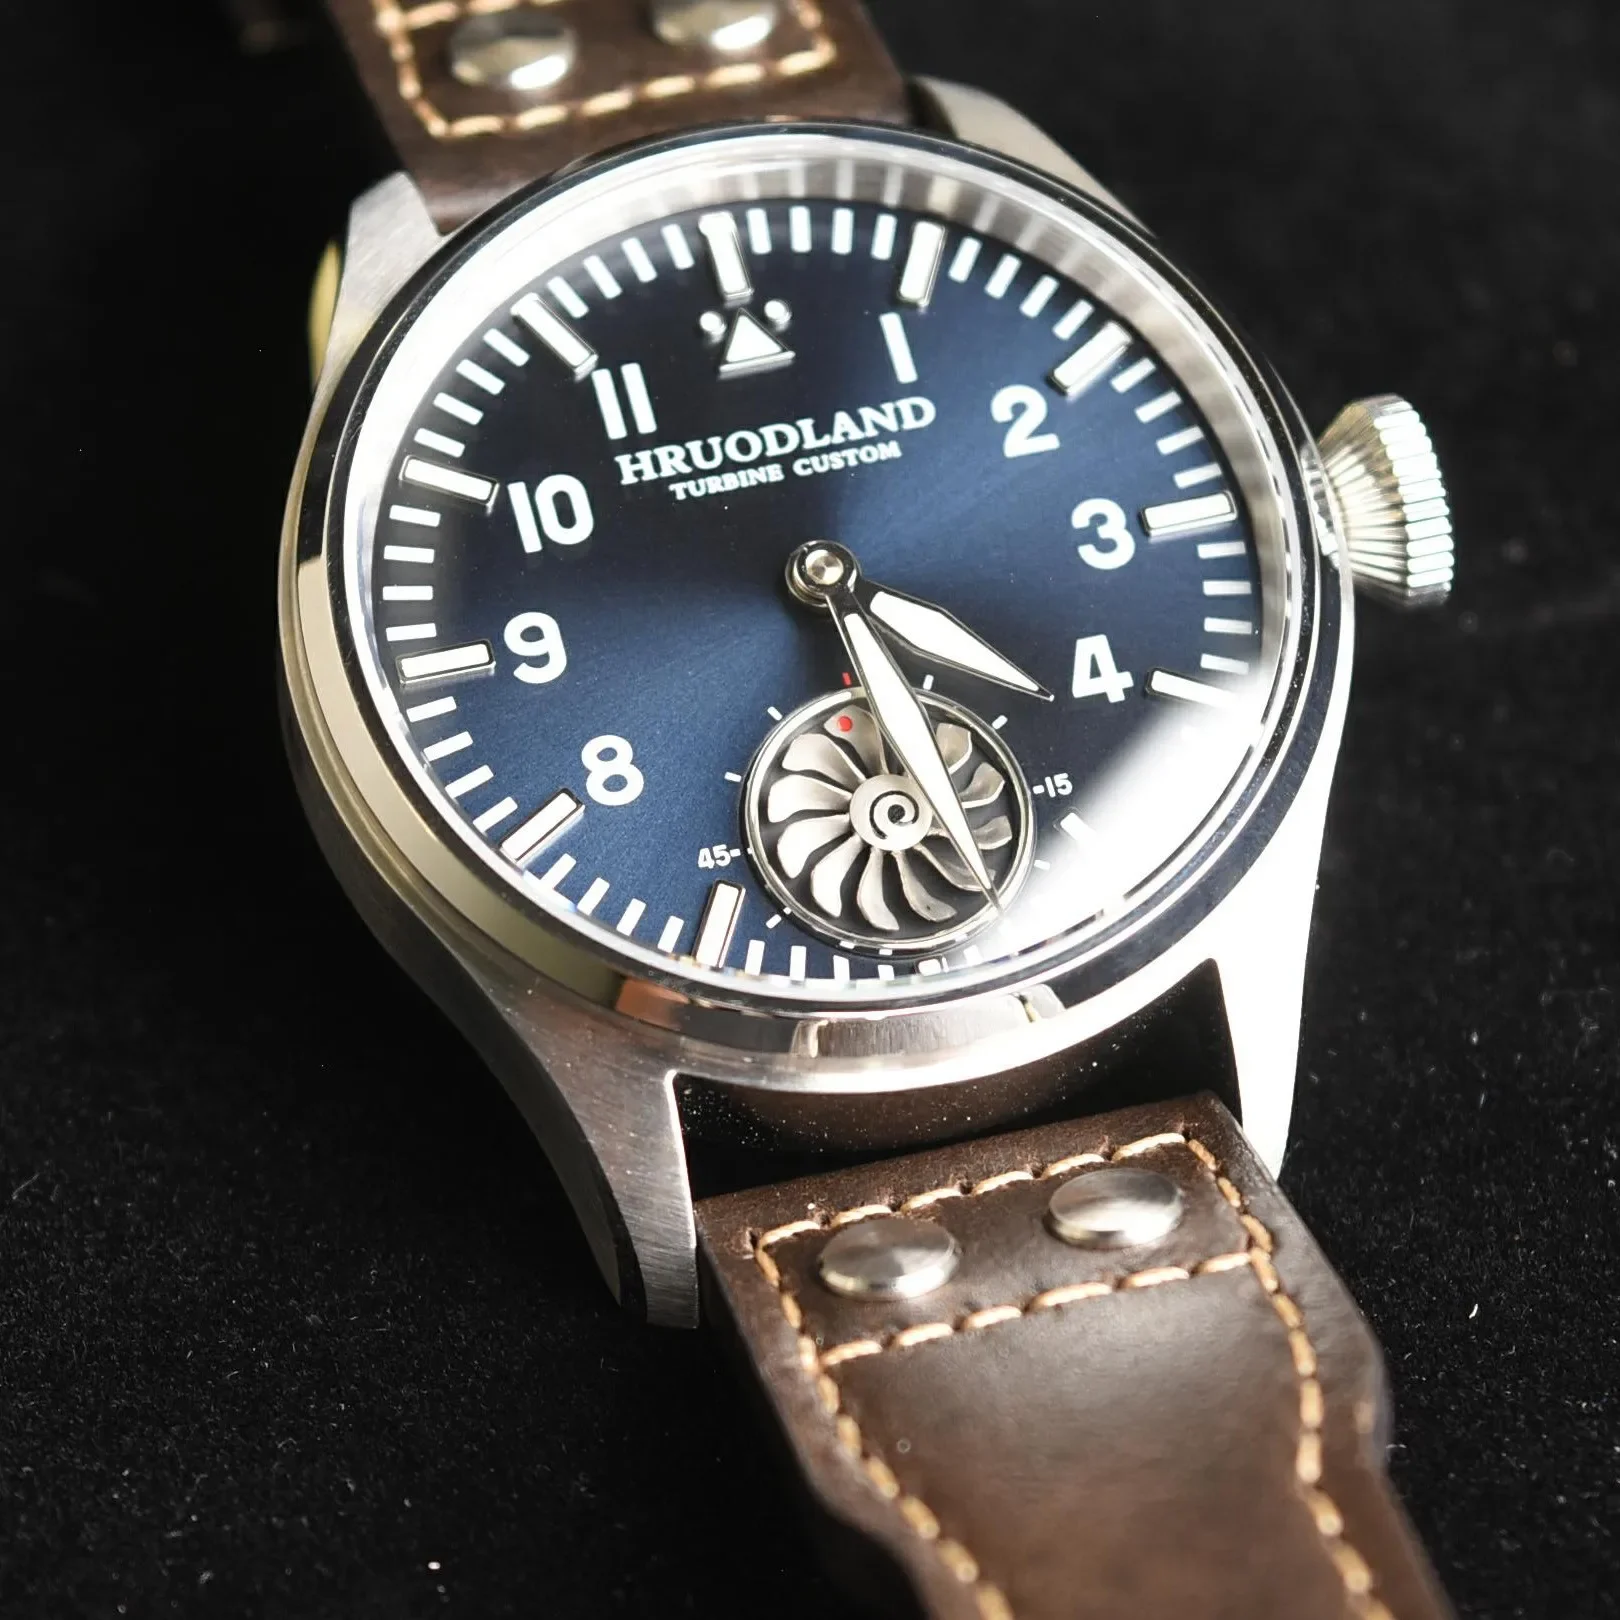 Hruodland-reloj piloto F016 ST3020 para hombre, accesorio de pulsera con movimiento mecánico, BGW-9 luminoso, cristal de zafiro, 43mm